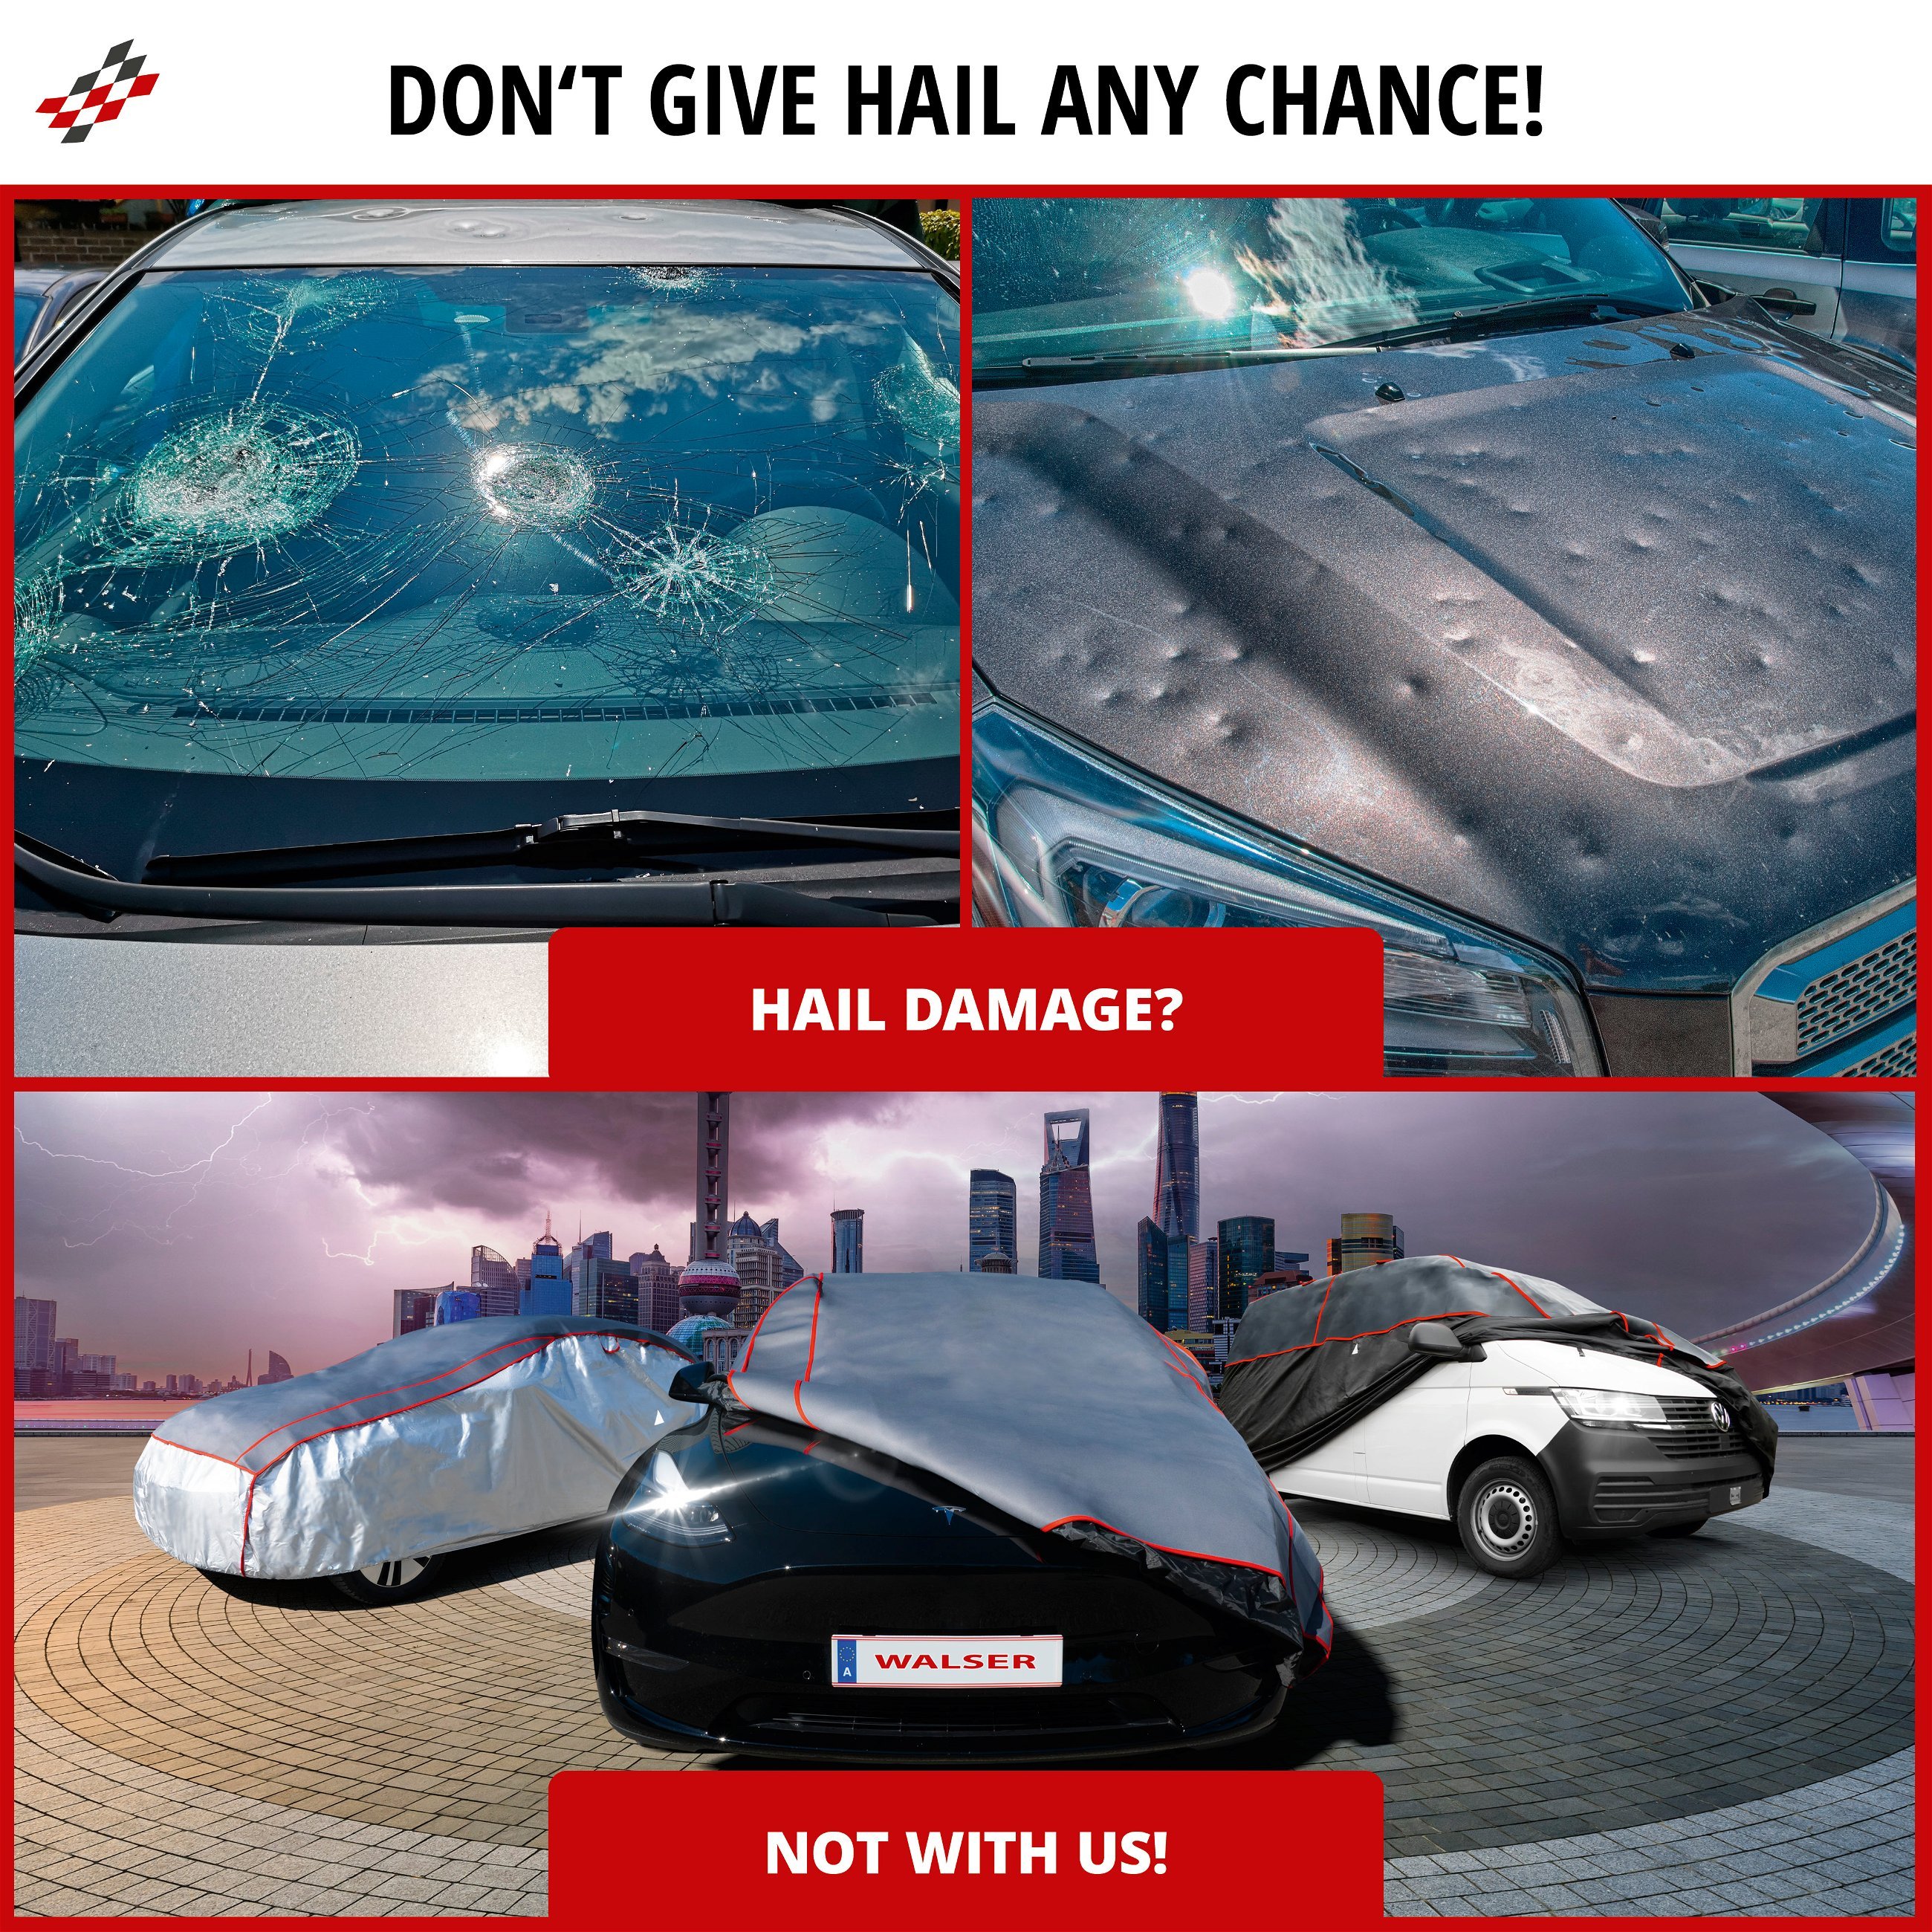 Car hail protection cover Premium Hybrid SUV size L